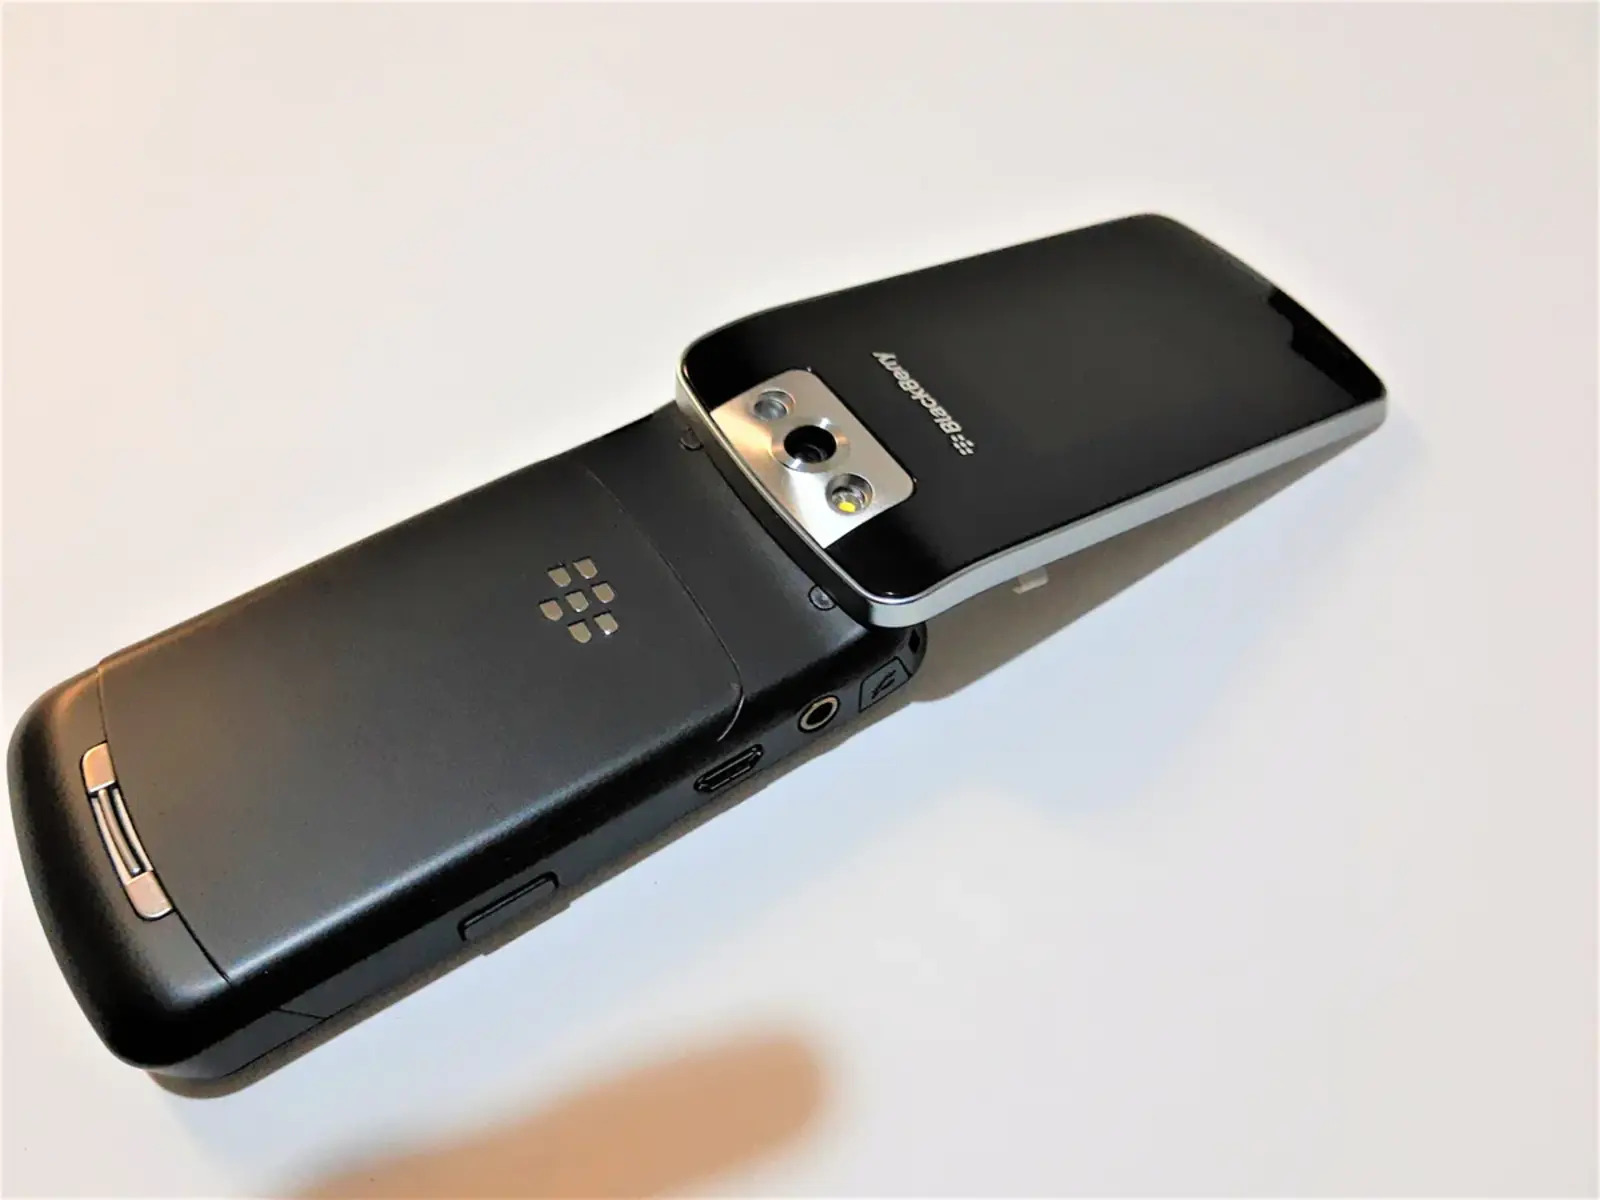 Identifying The SIM Card Location On Blackberry Pearl